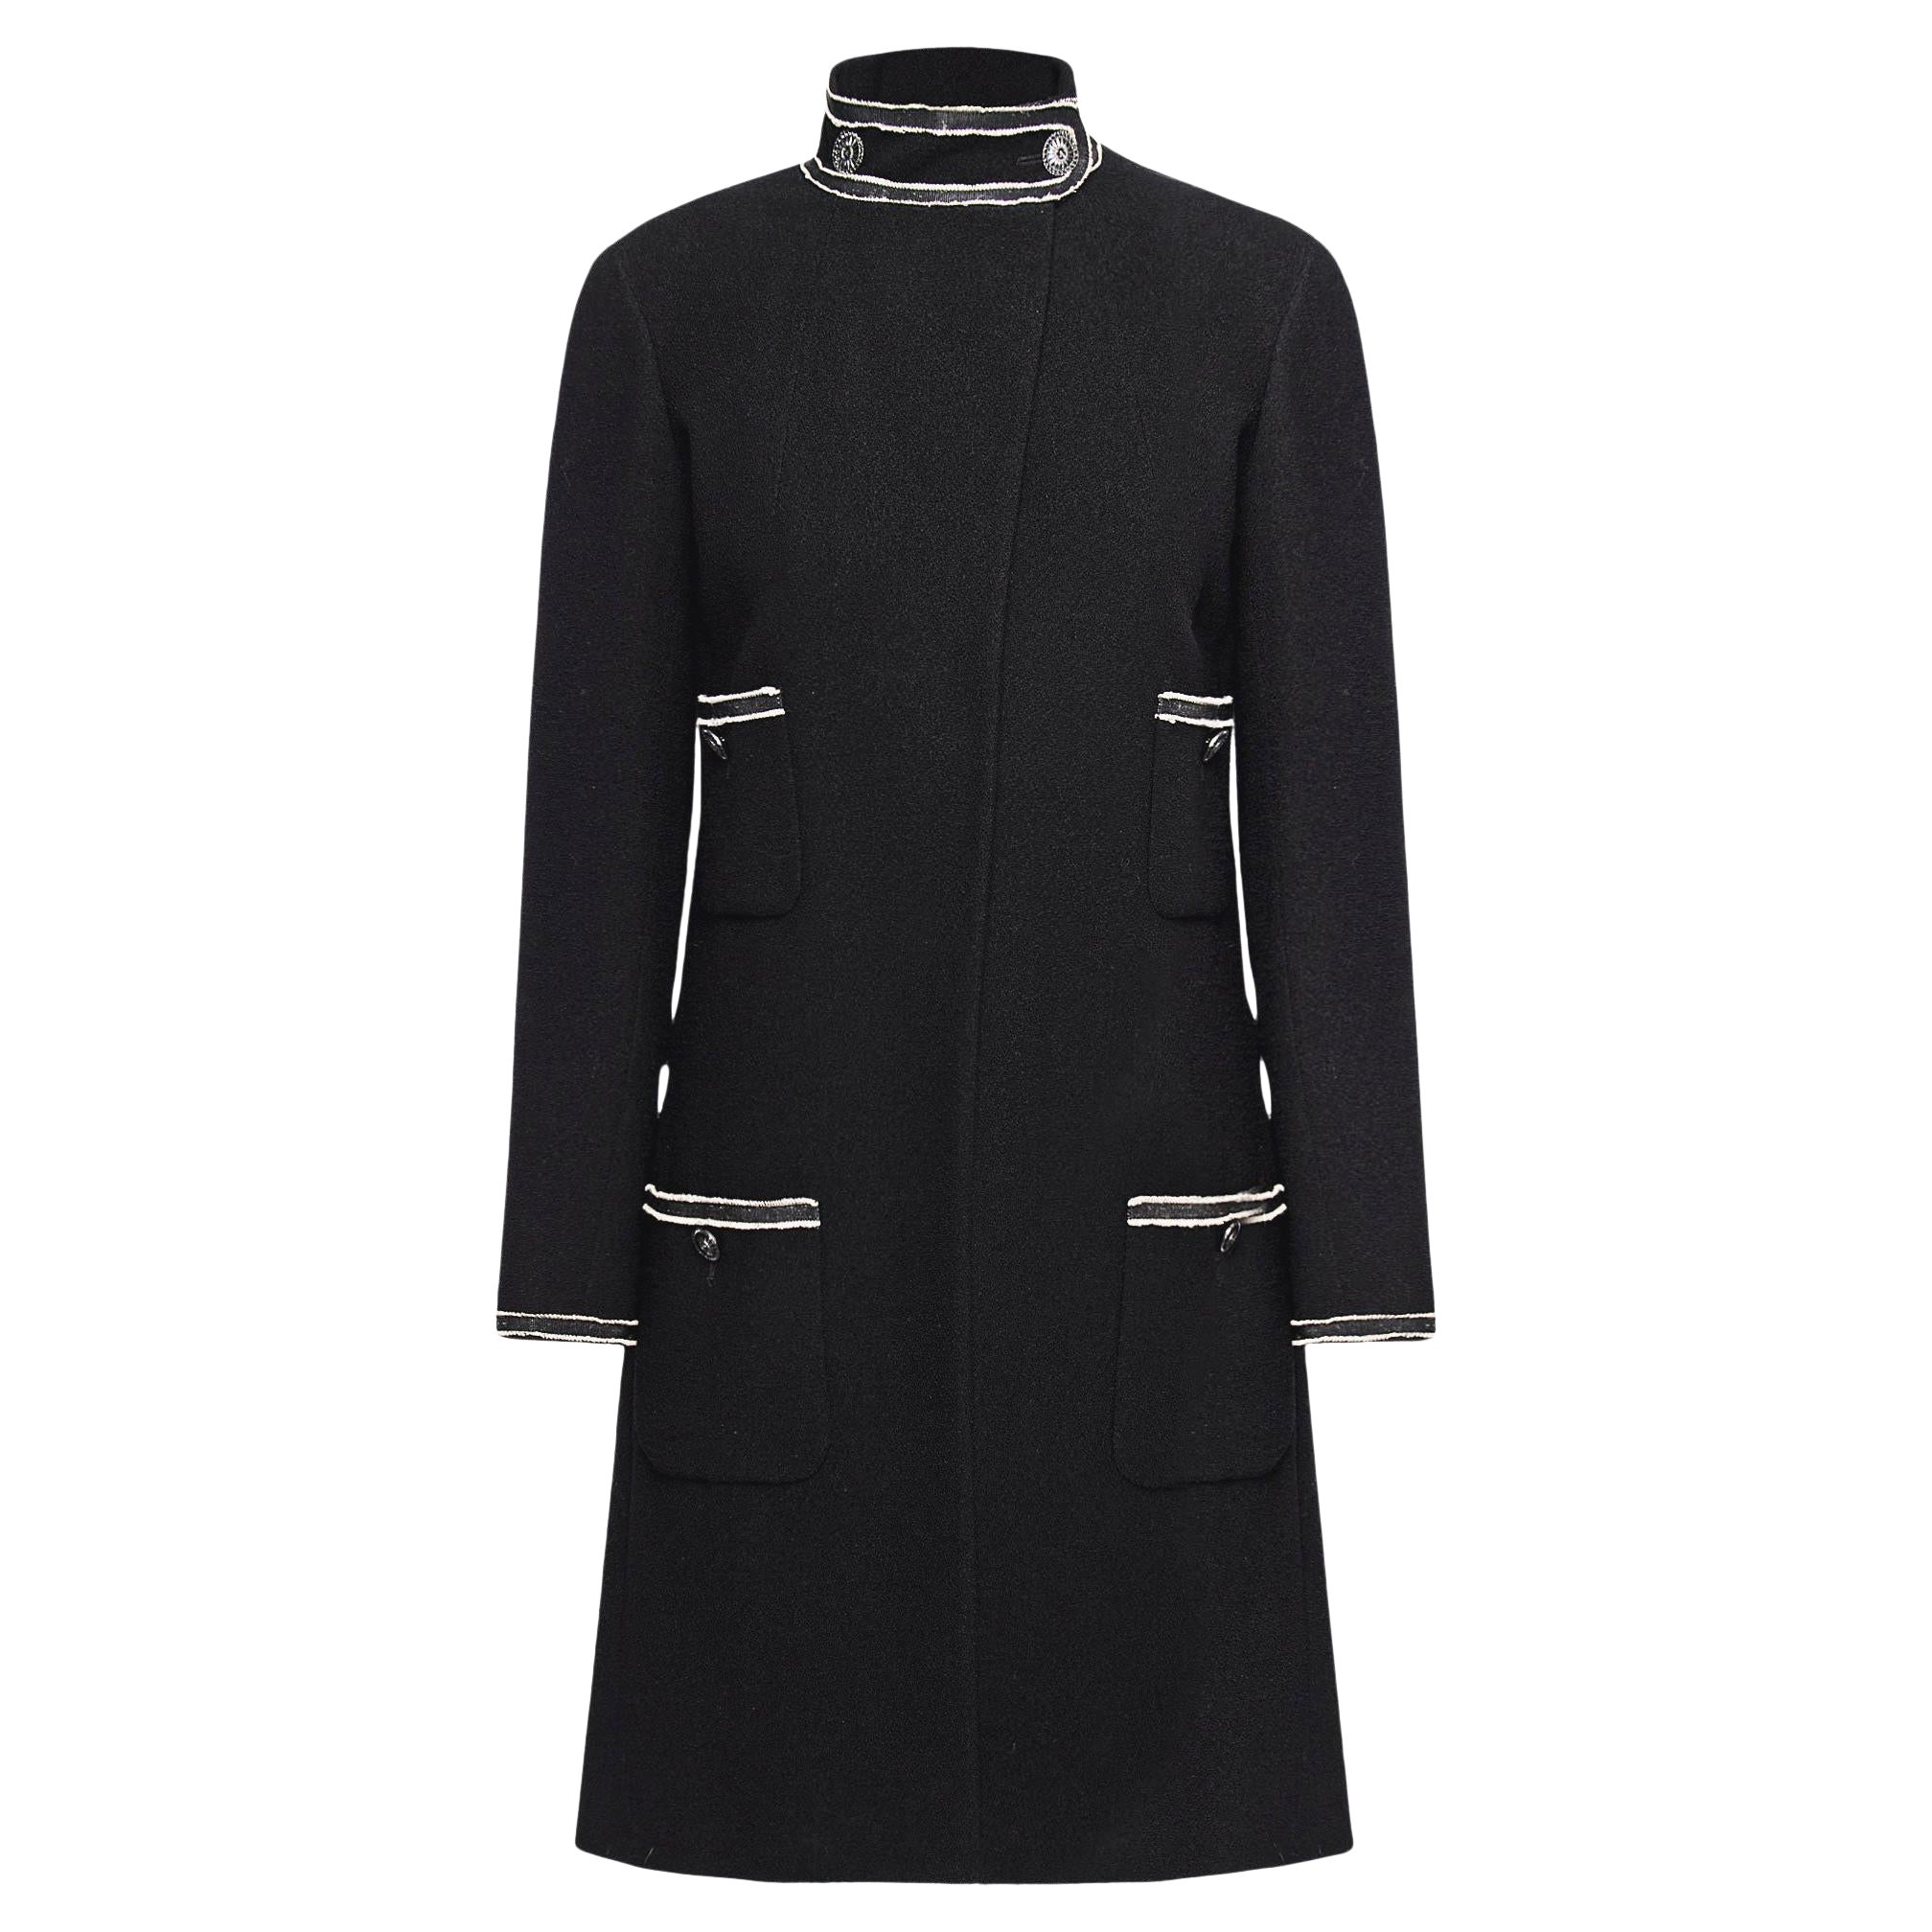 Chanel CC Buttons Paris / Singapore Runway Black Tweed Coat For Sale